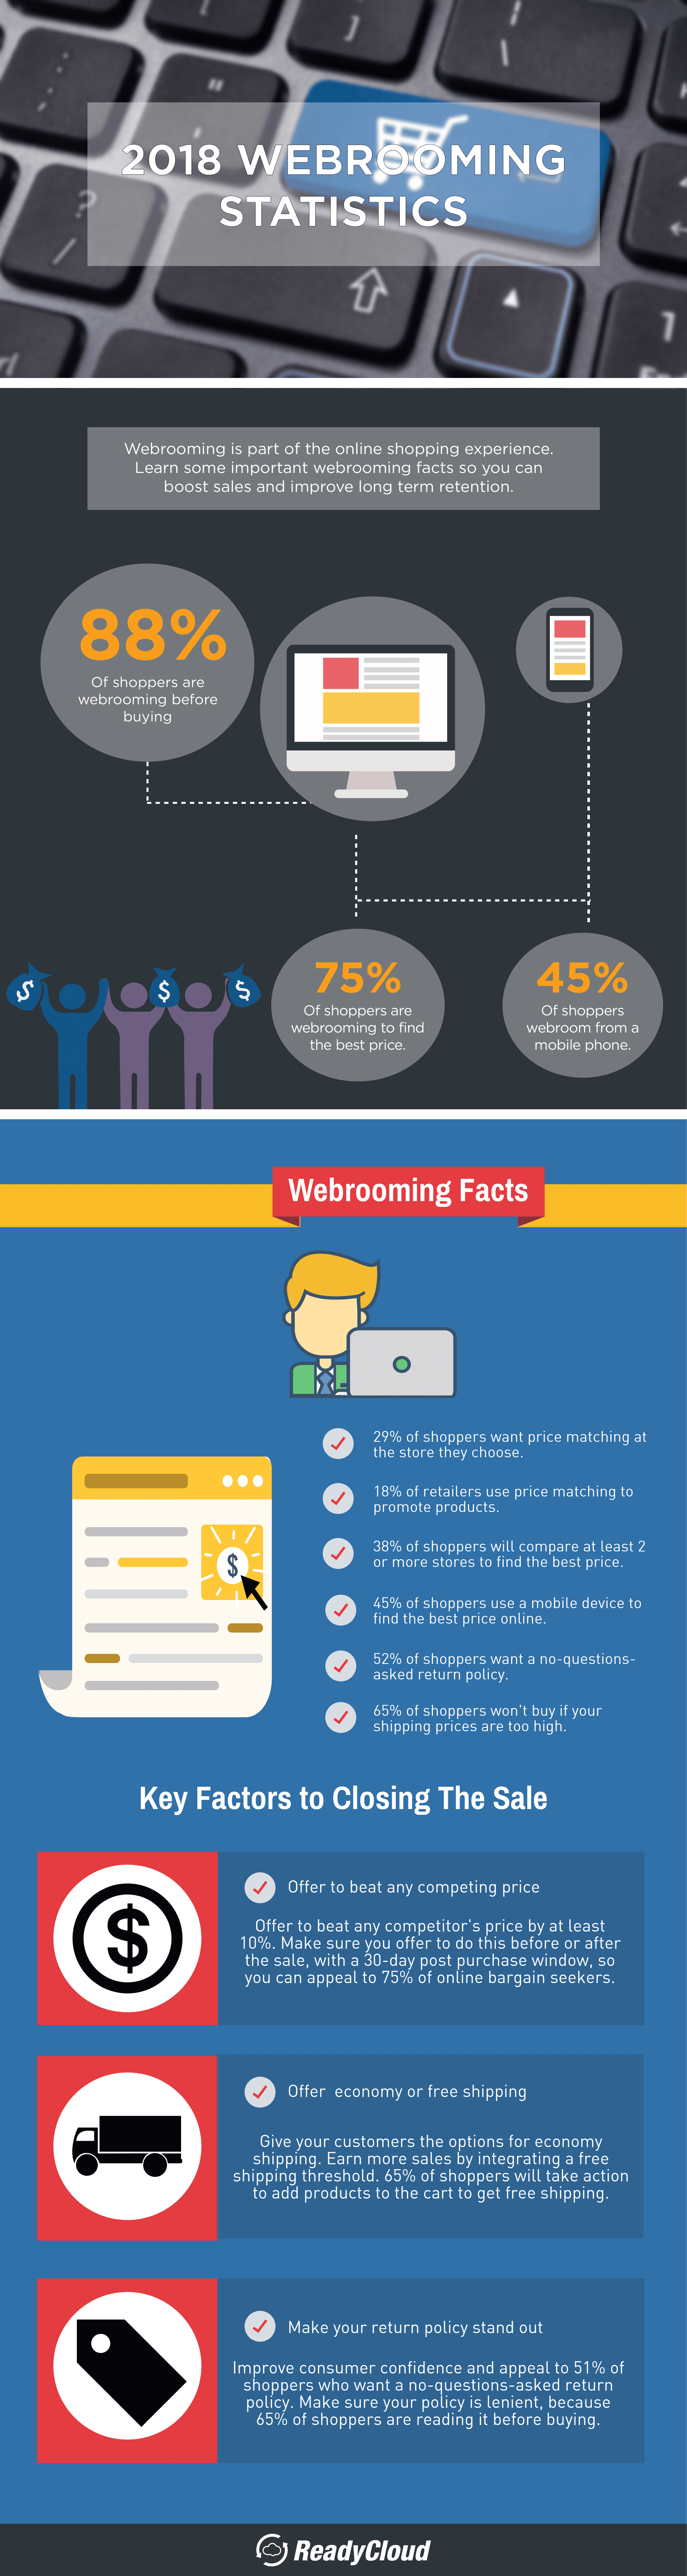 Infographic: 2018 Webrooming Statistics